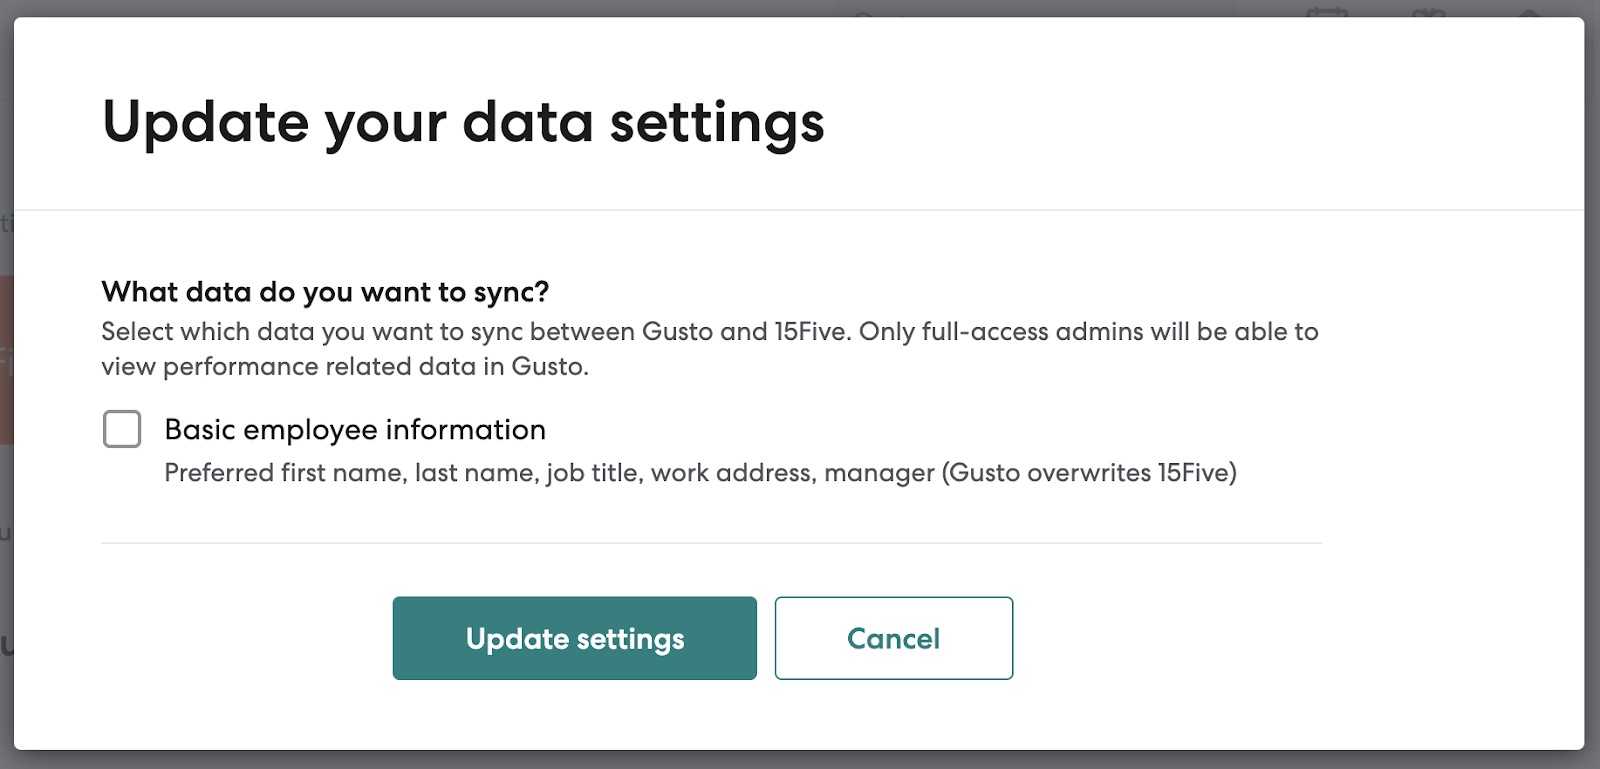 Update_your_data_settings.jpg